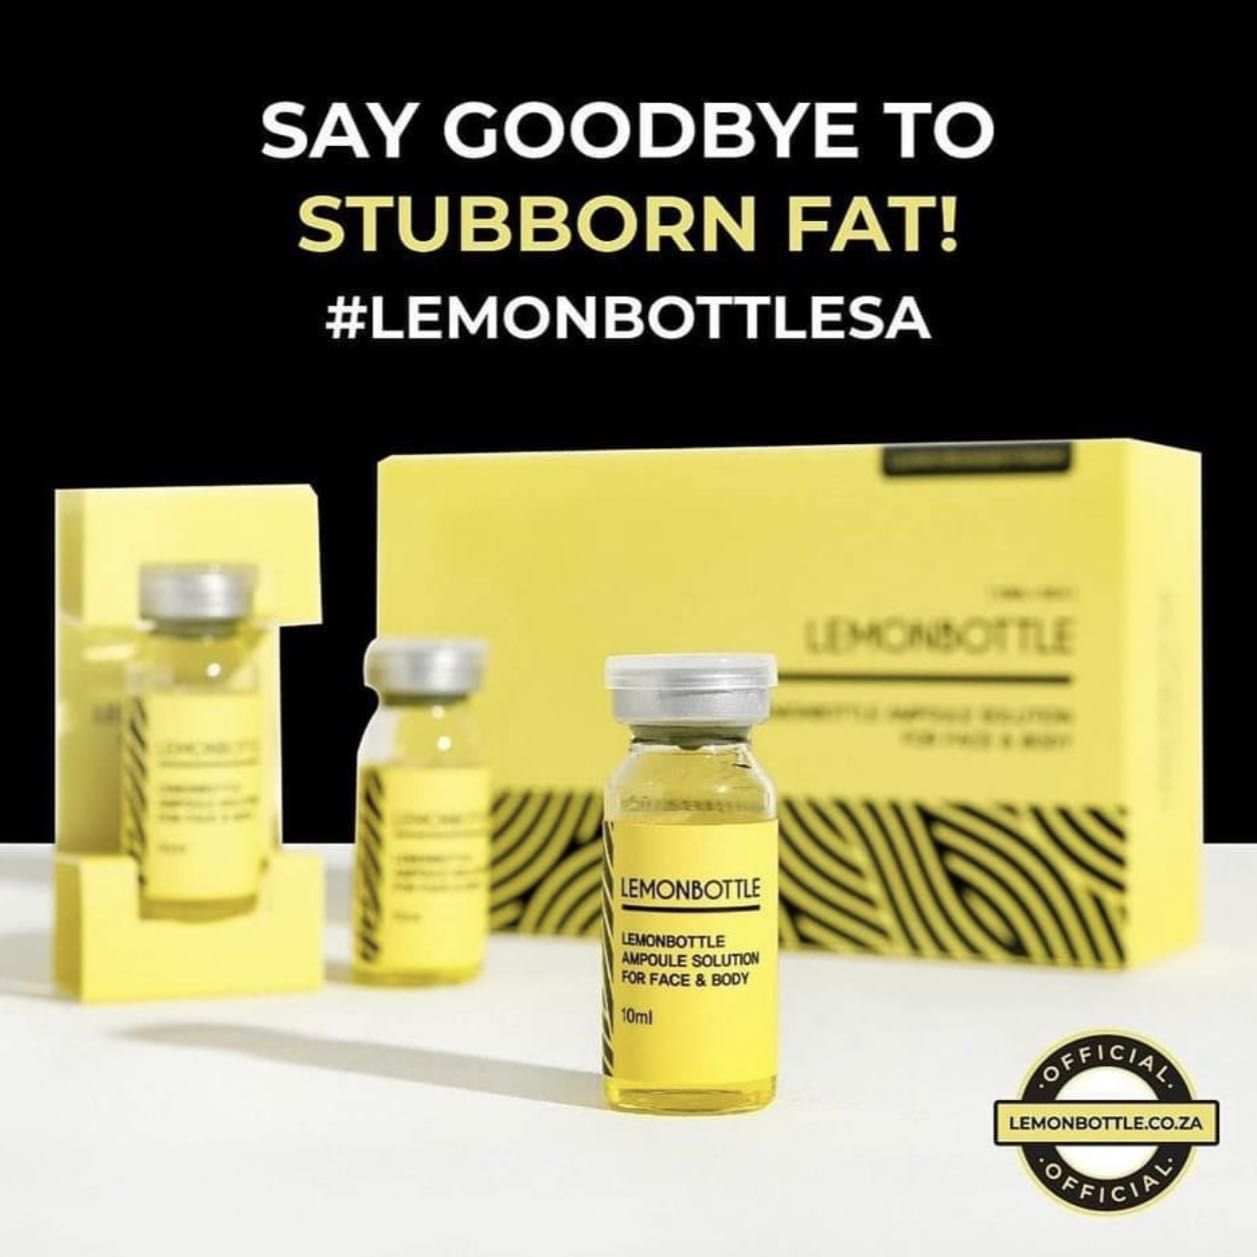 🍋 Lemon Bottle Fat dissolving injections CHIN portfolio